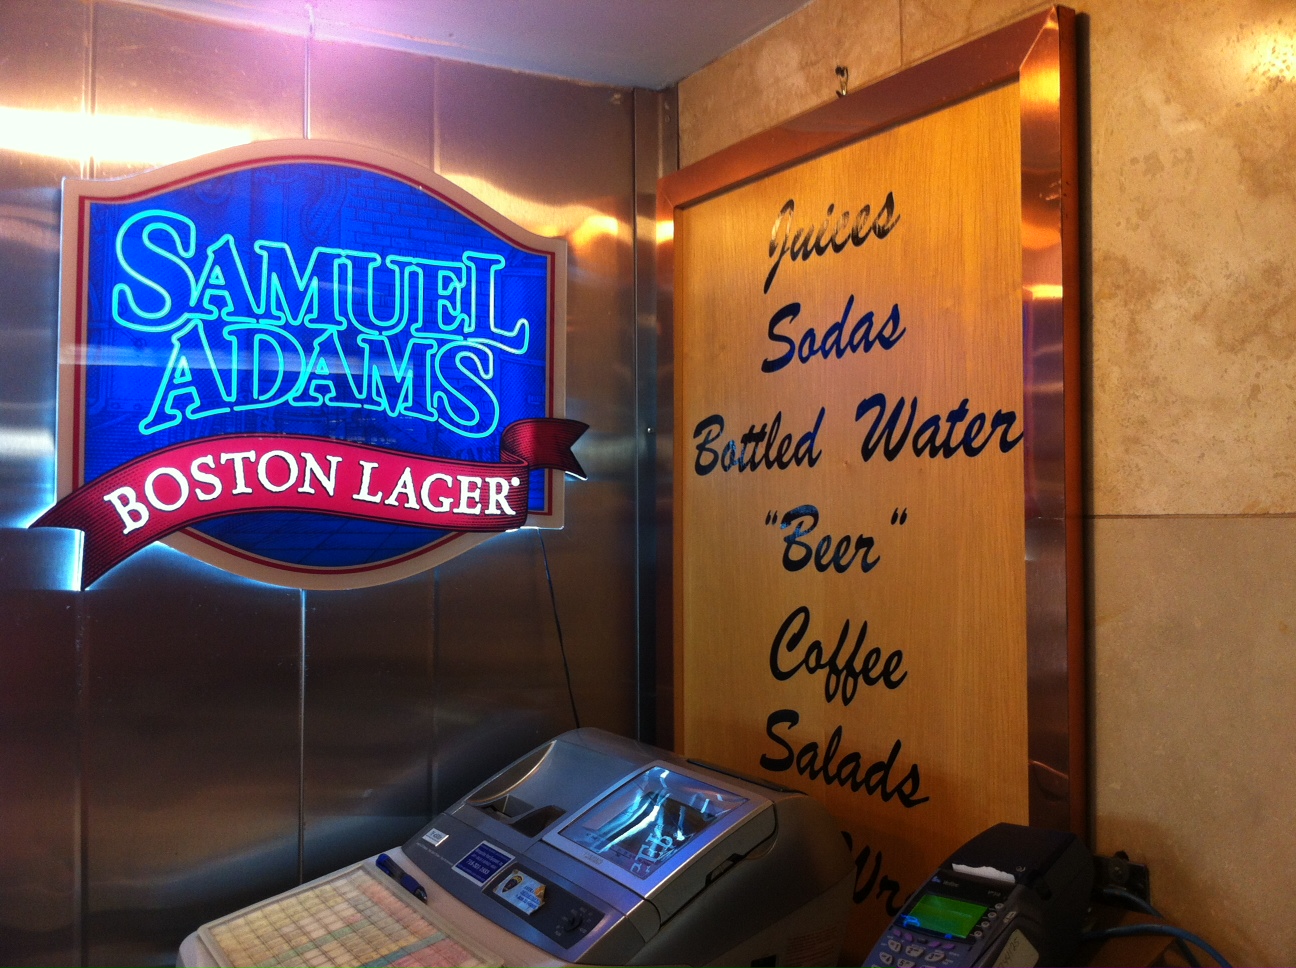 signage - Samuel w Sodas Oston Lager Bottled Water "Beer" Coffee Salads